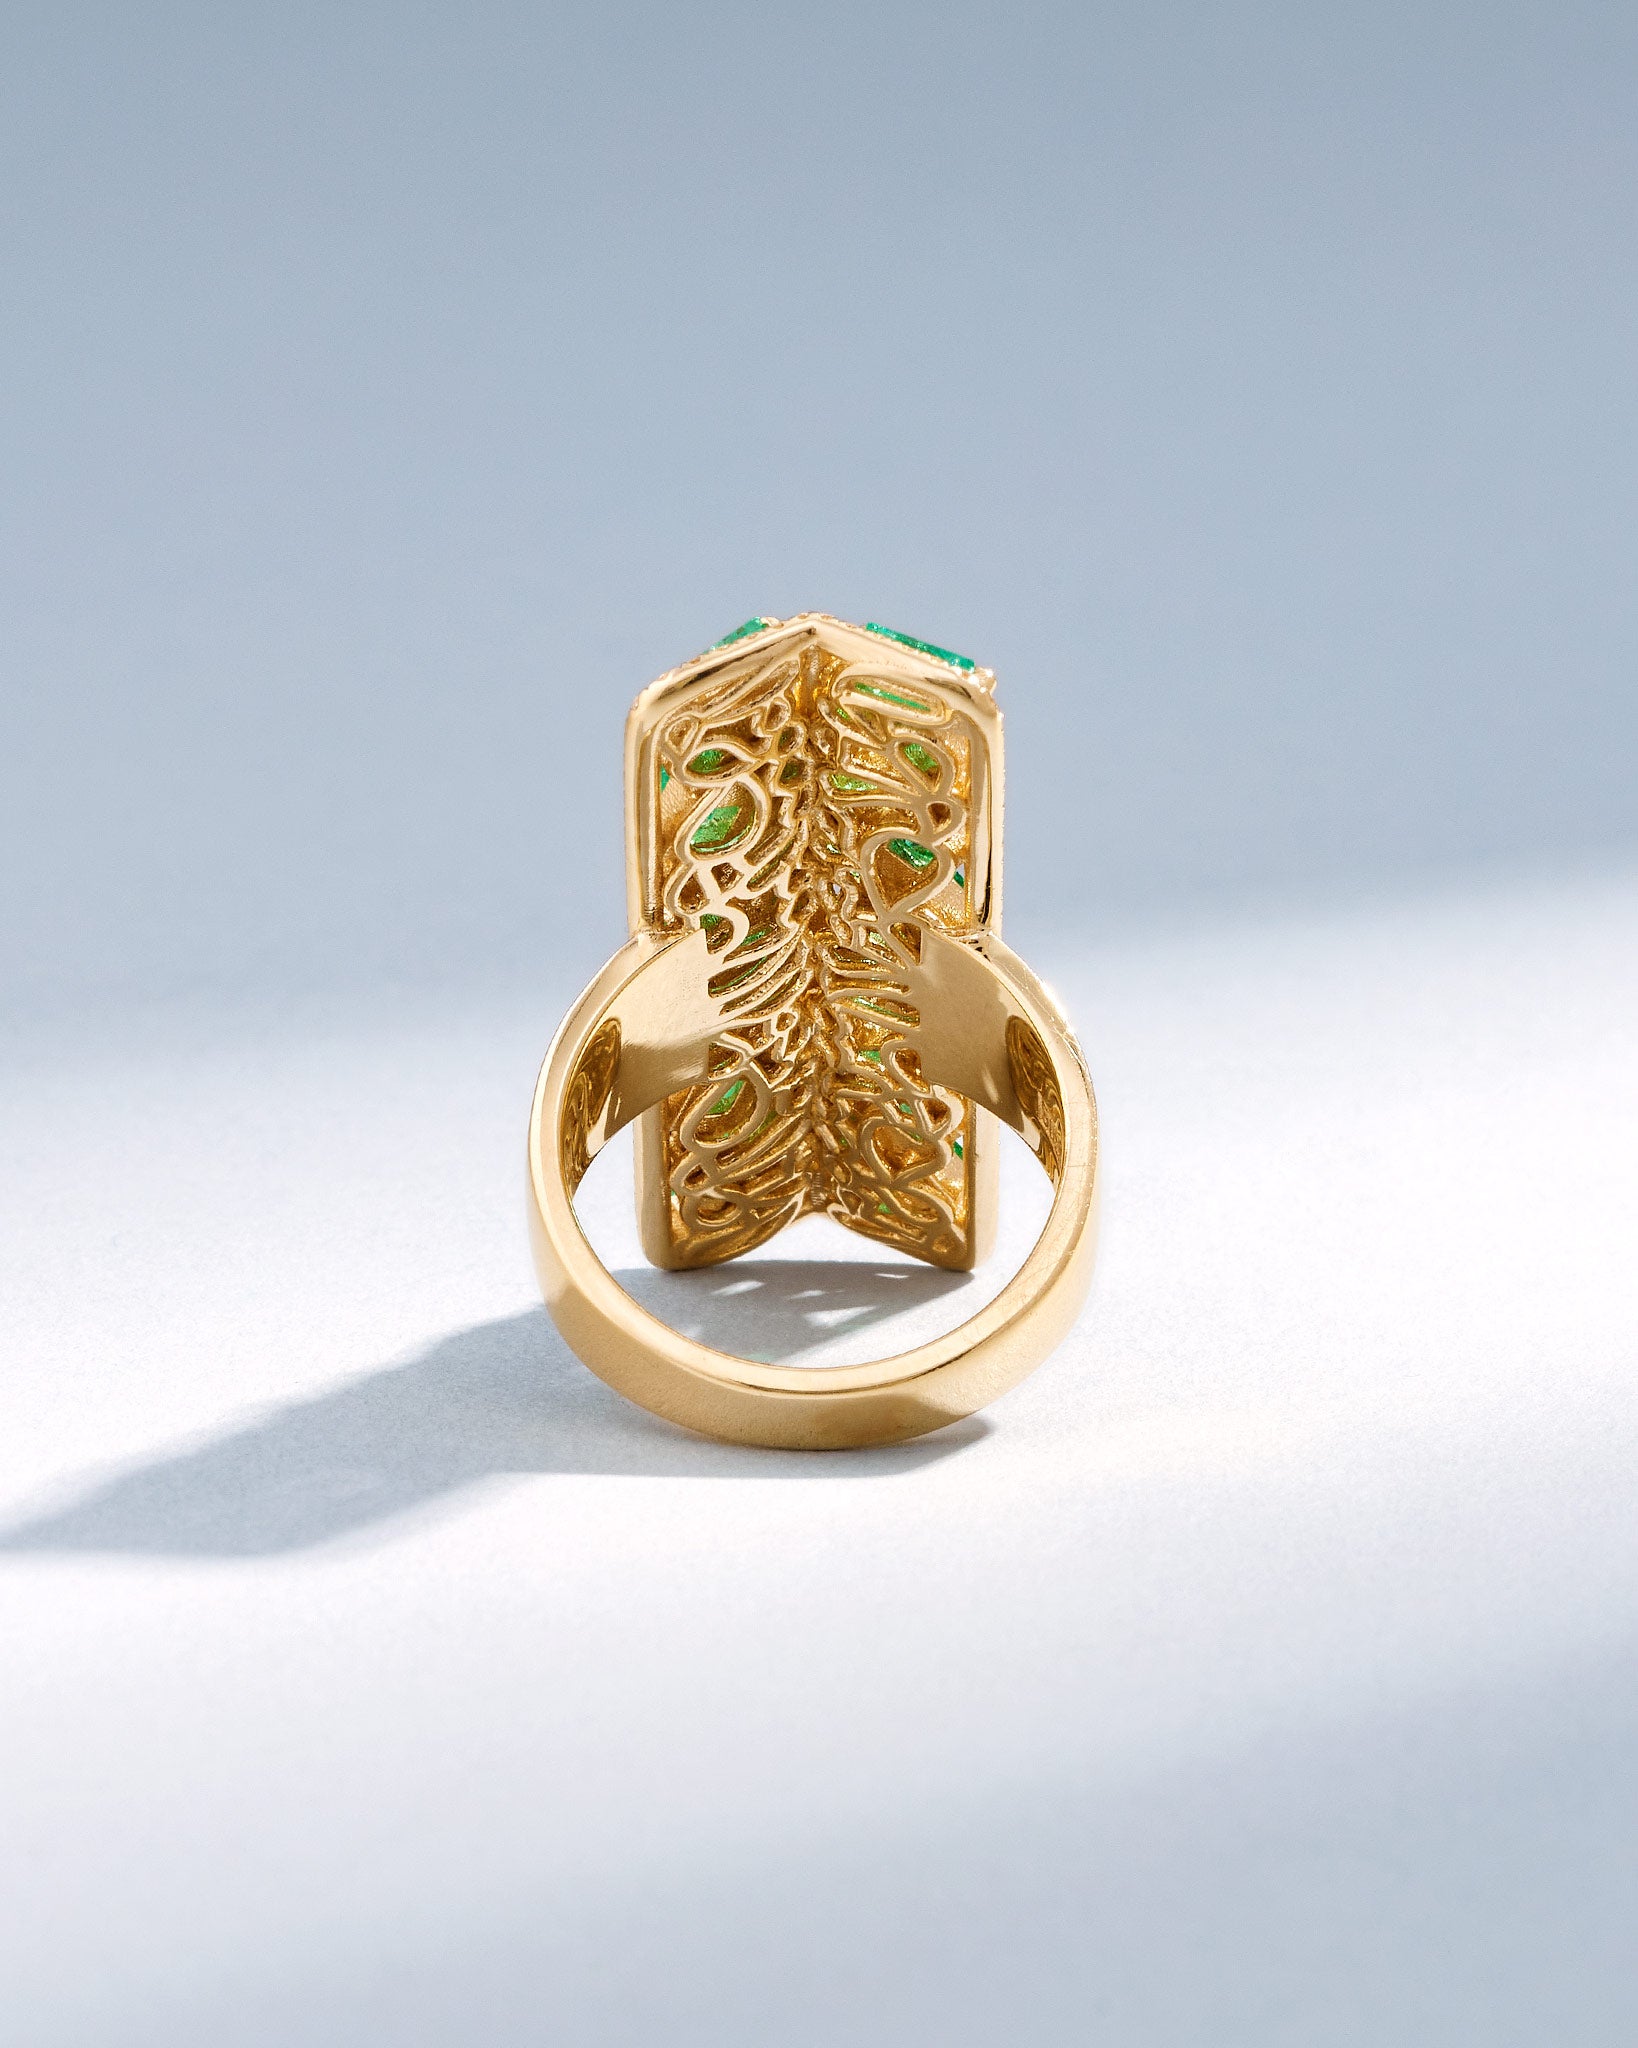 Suzanne Kalan La Fantaisie Sunbeam Emerald Ring in 18k yellow gold